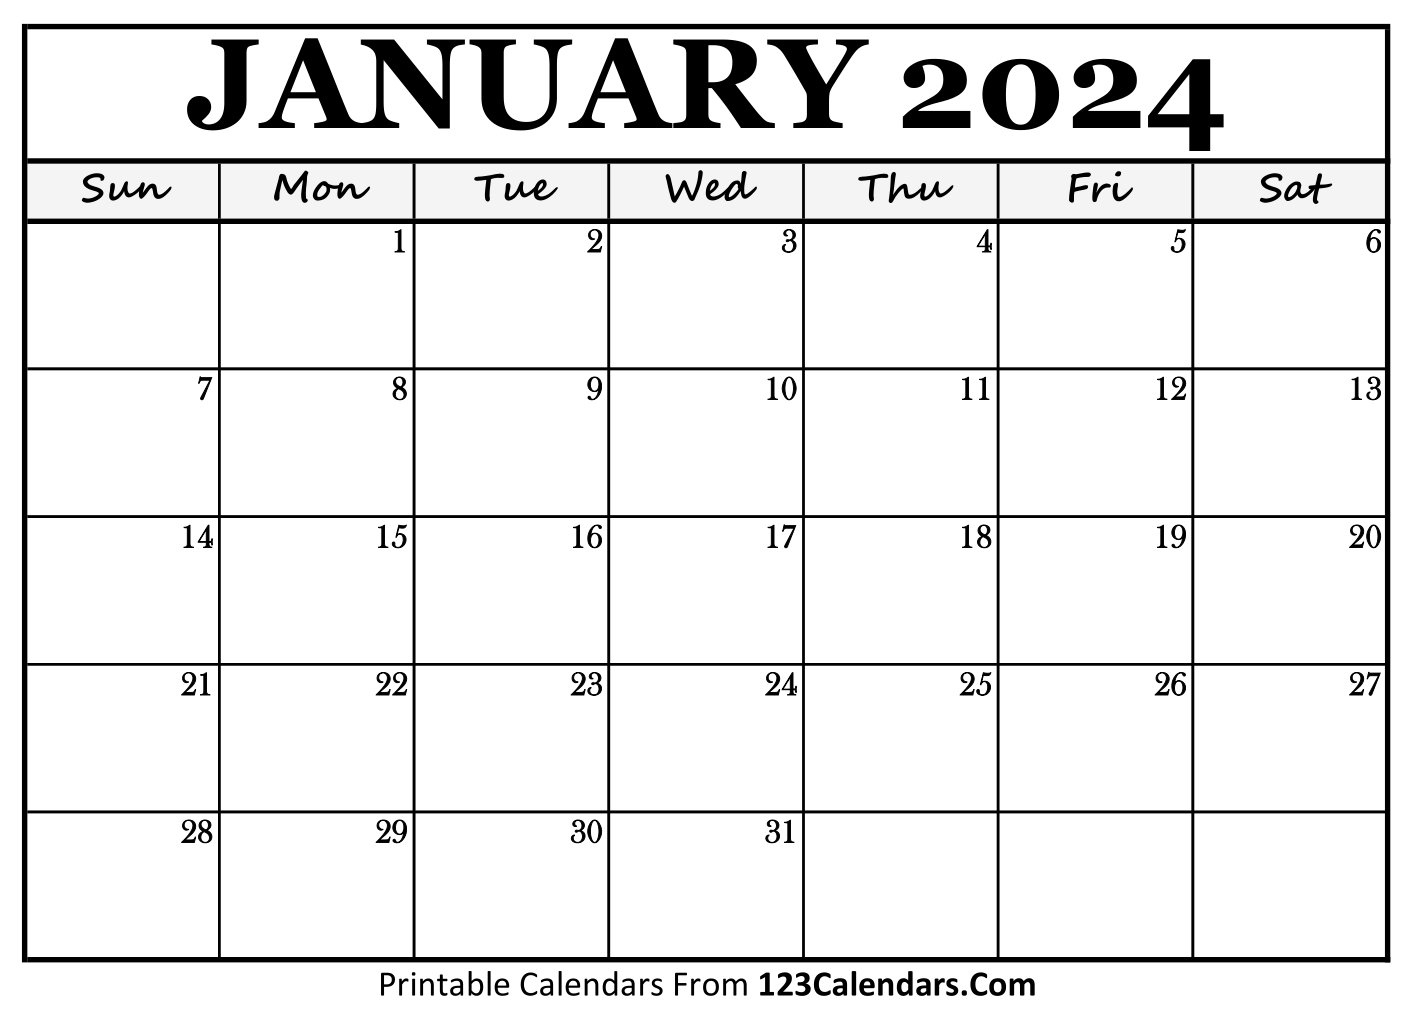 Printable January 2024 Calendar Templates - 123Calendars | Printable Calendar 2024 January Wiki